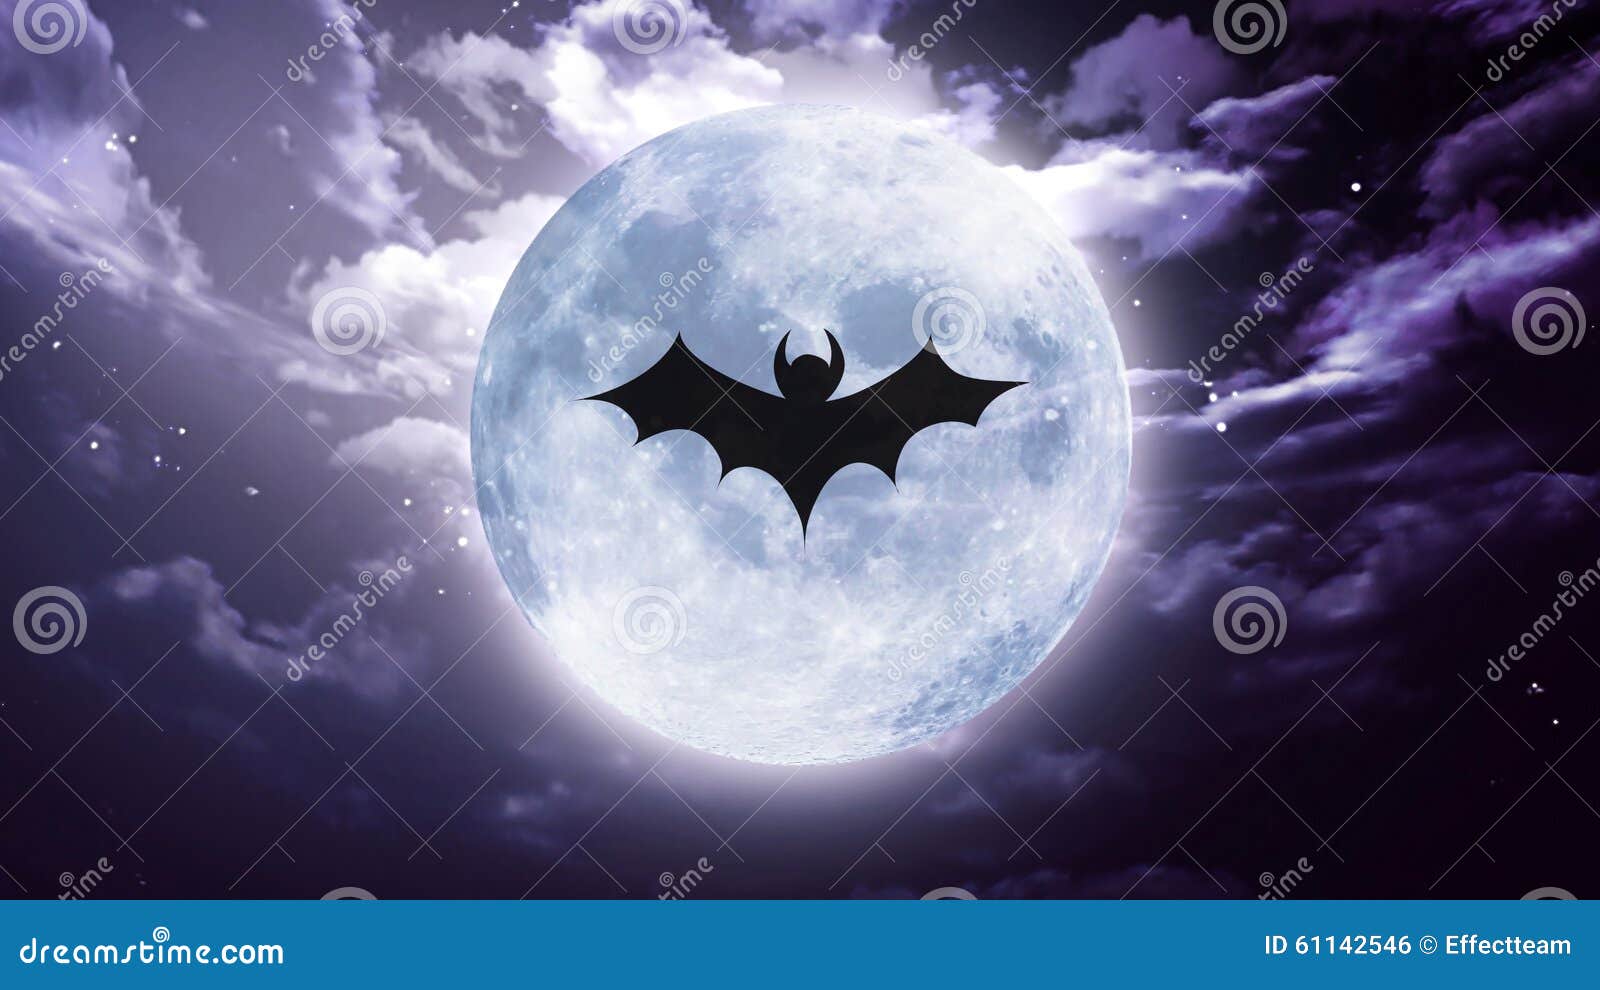 Full Moon with Bat #5